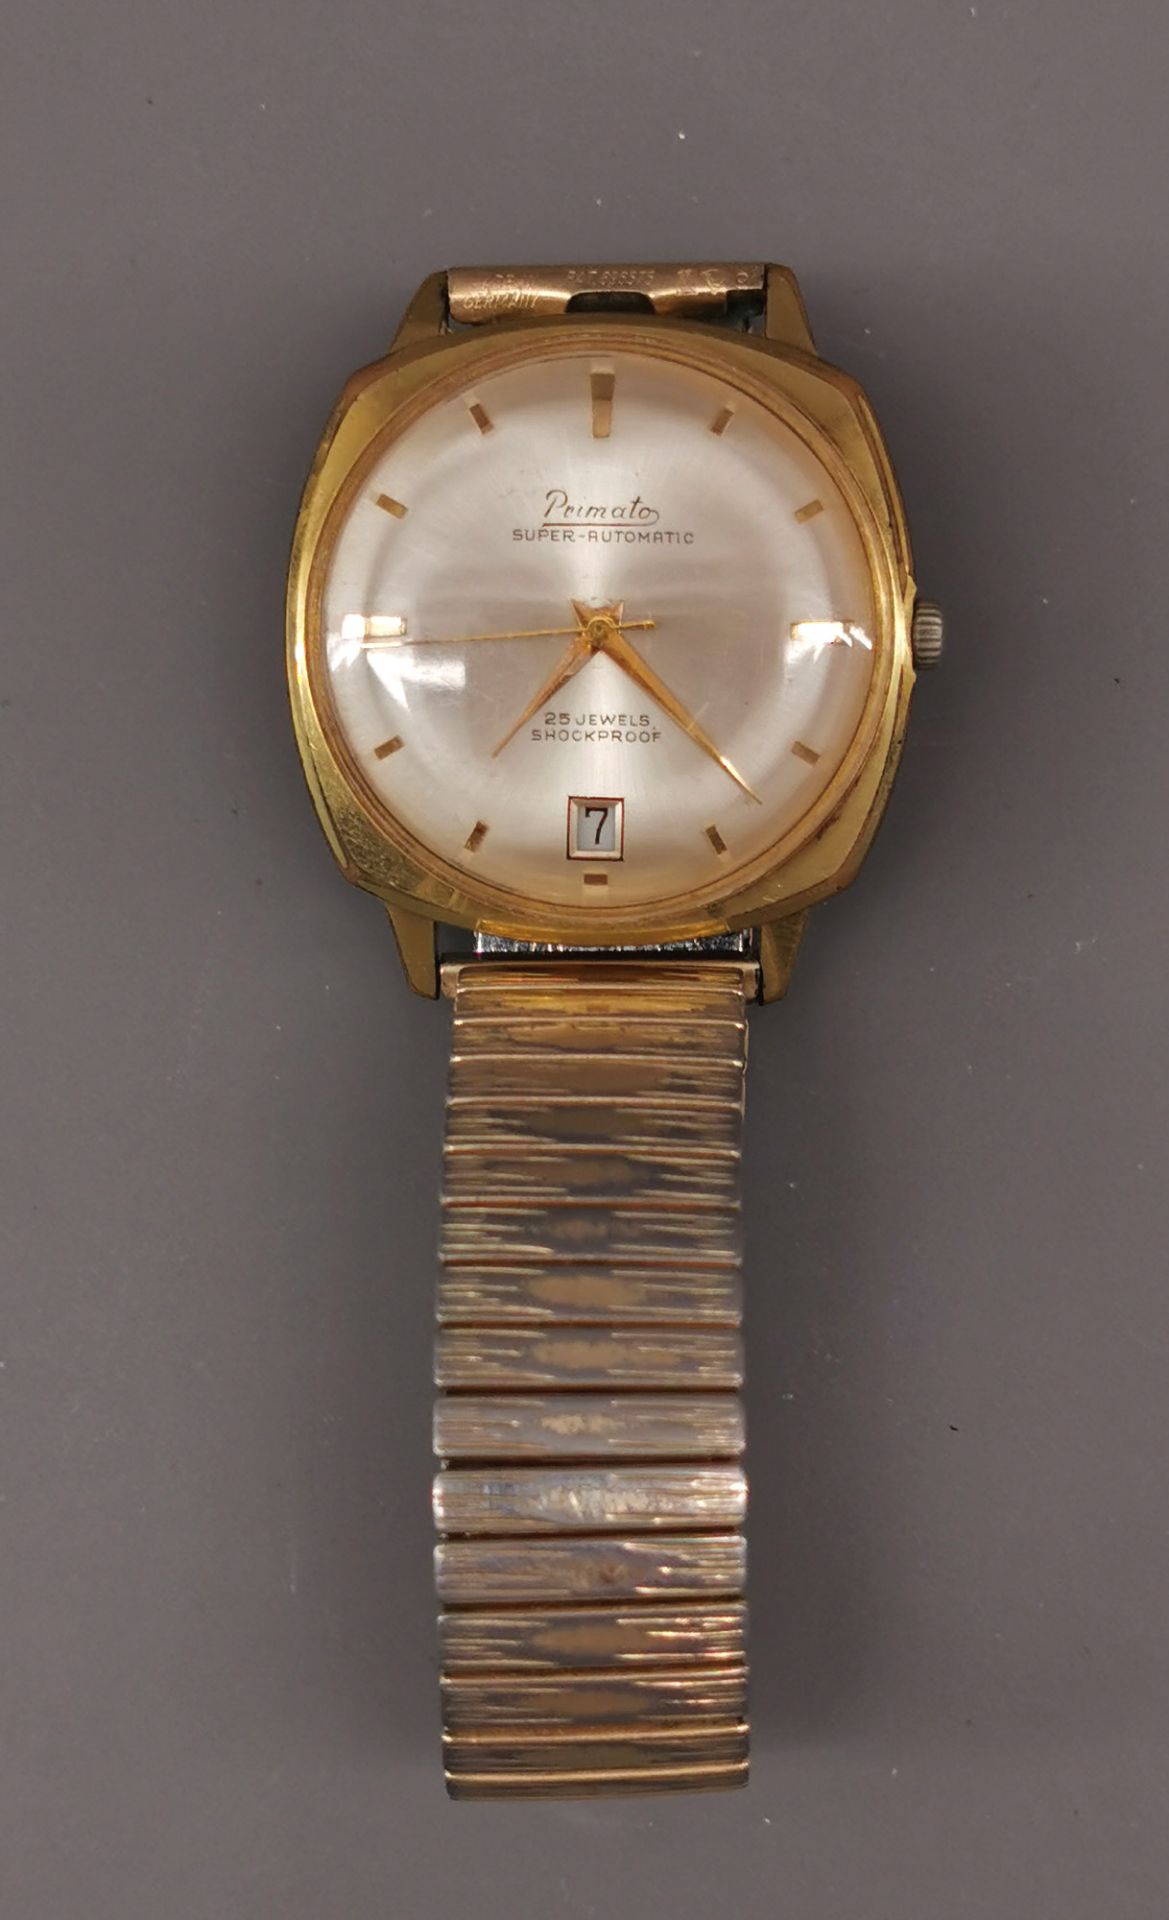 Herren-Armbanduhr Primato Super-Automatic Vintage